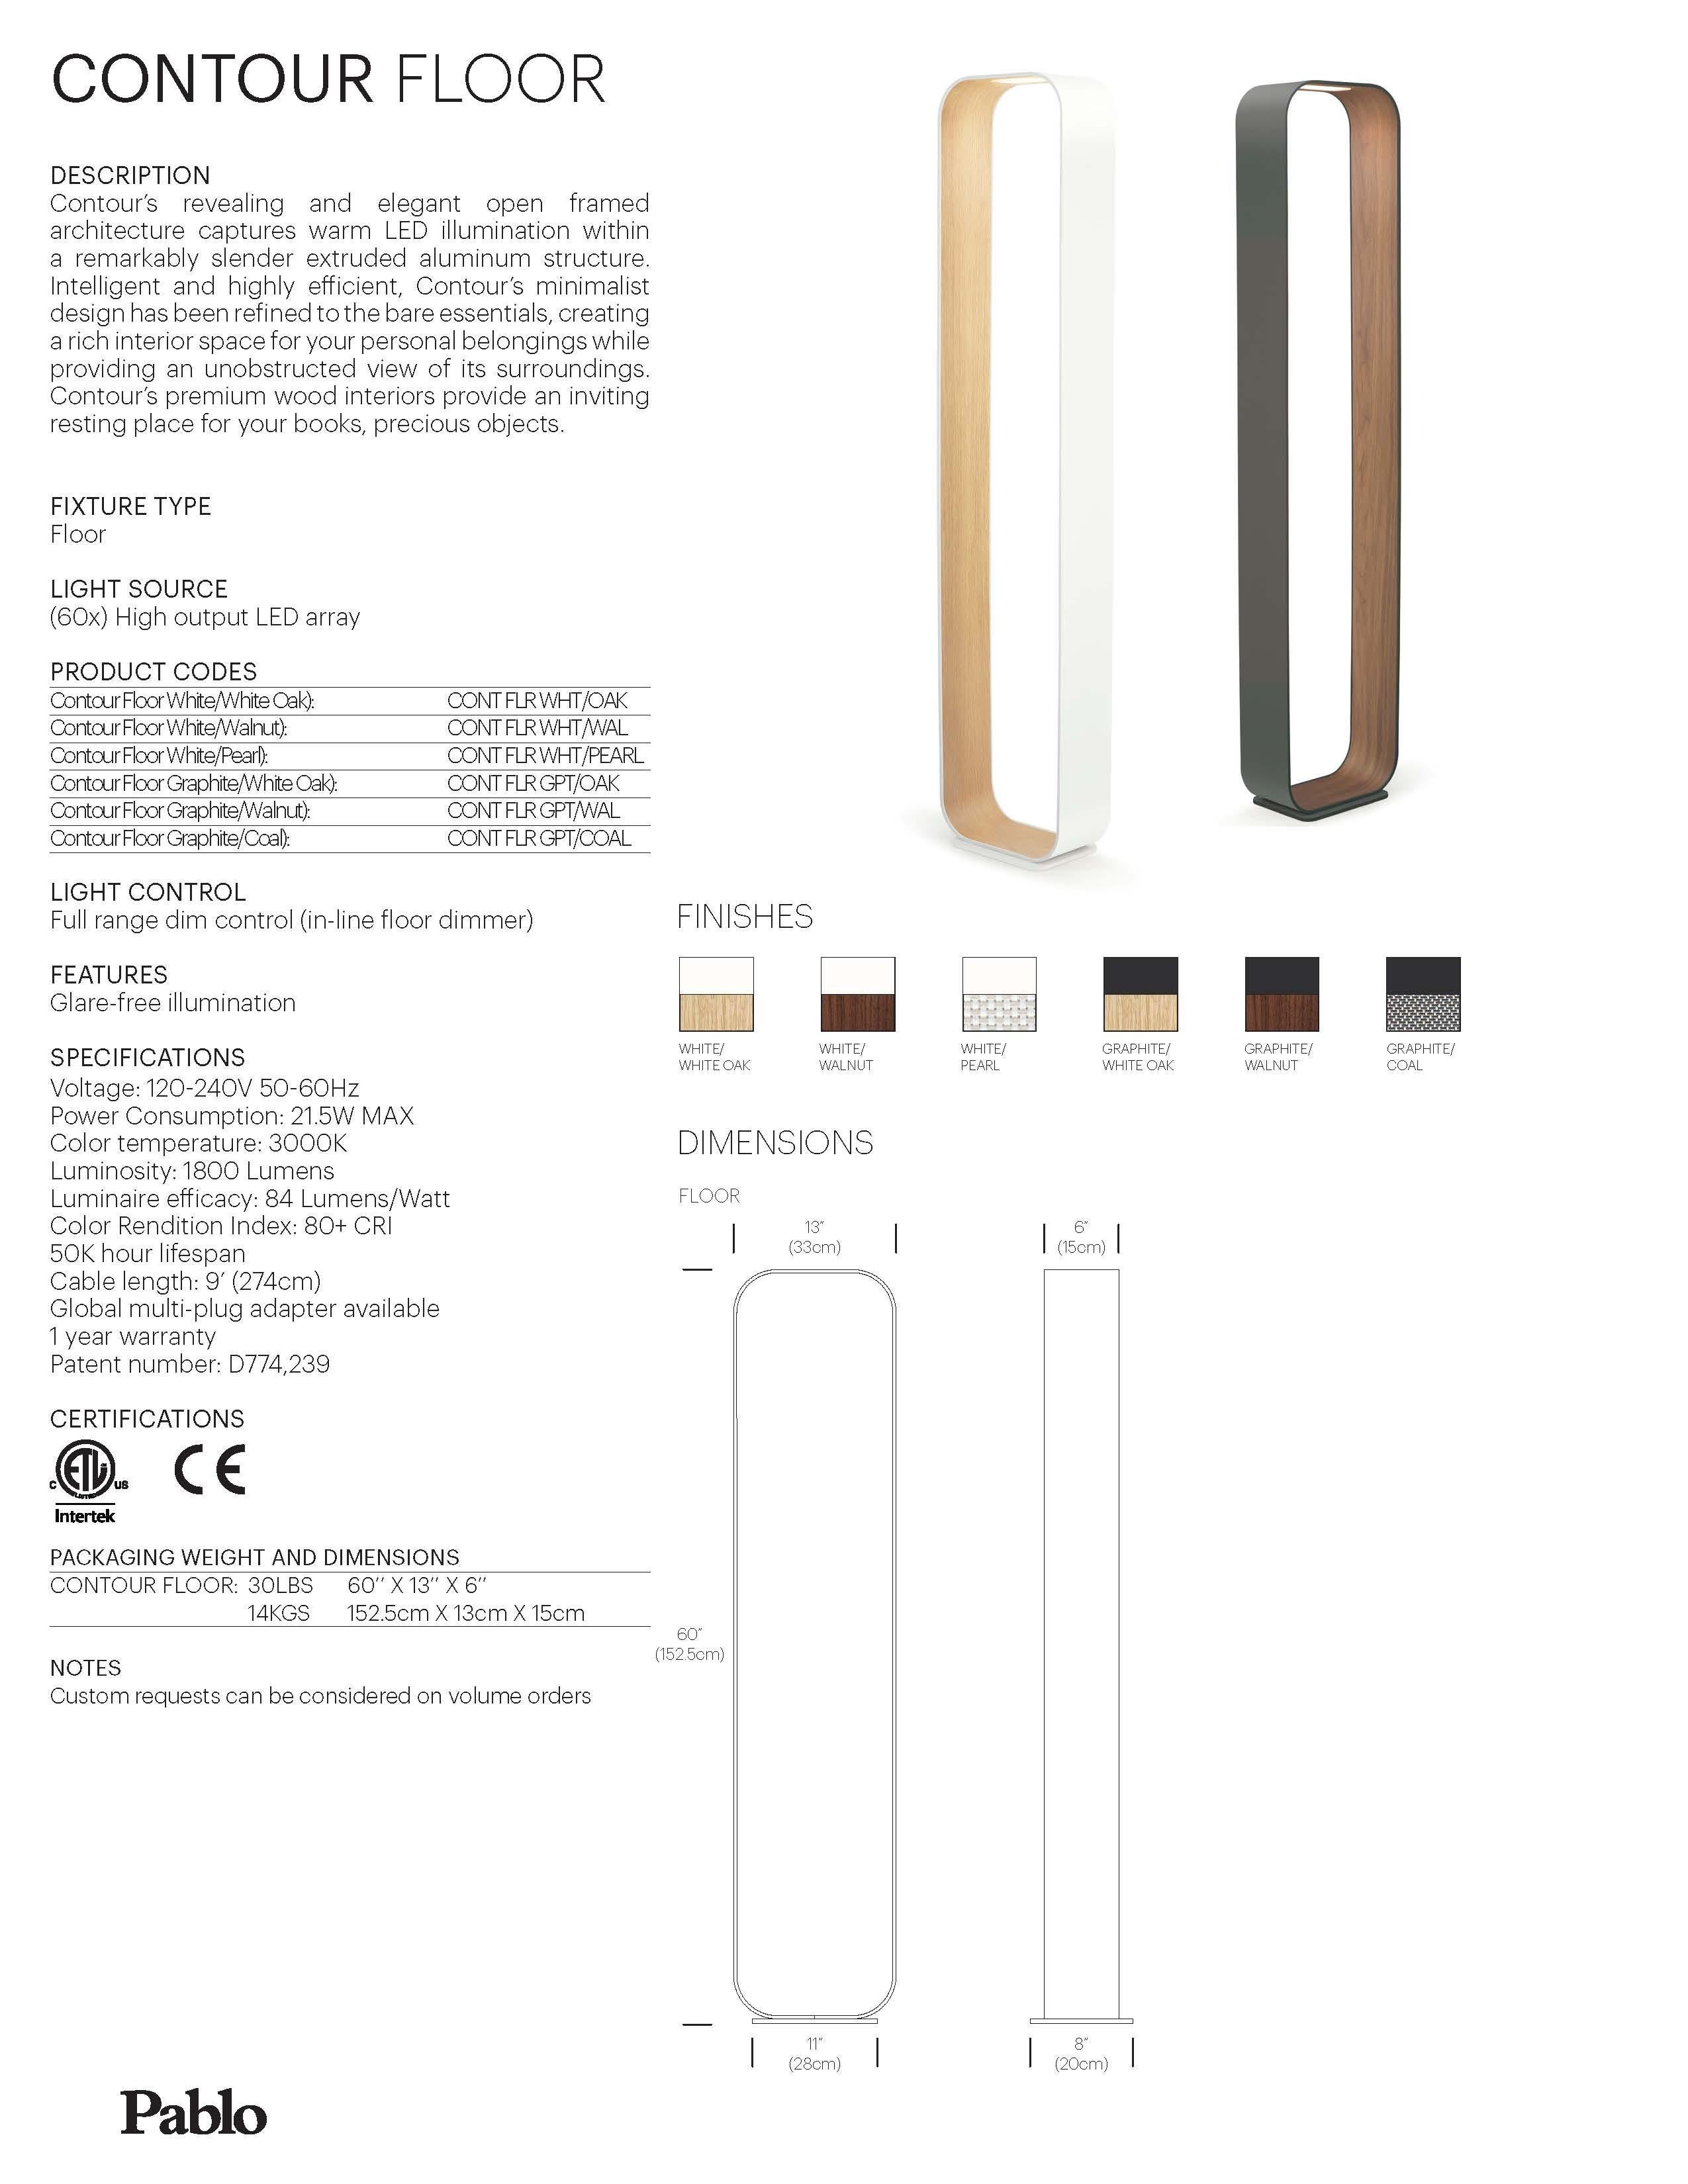 Contemporary Contour Floor Lamp in Graphite & White Oak by Pablo Designs For Sale